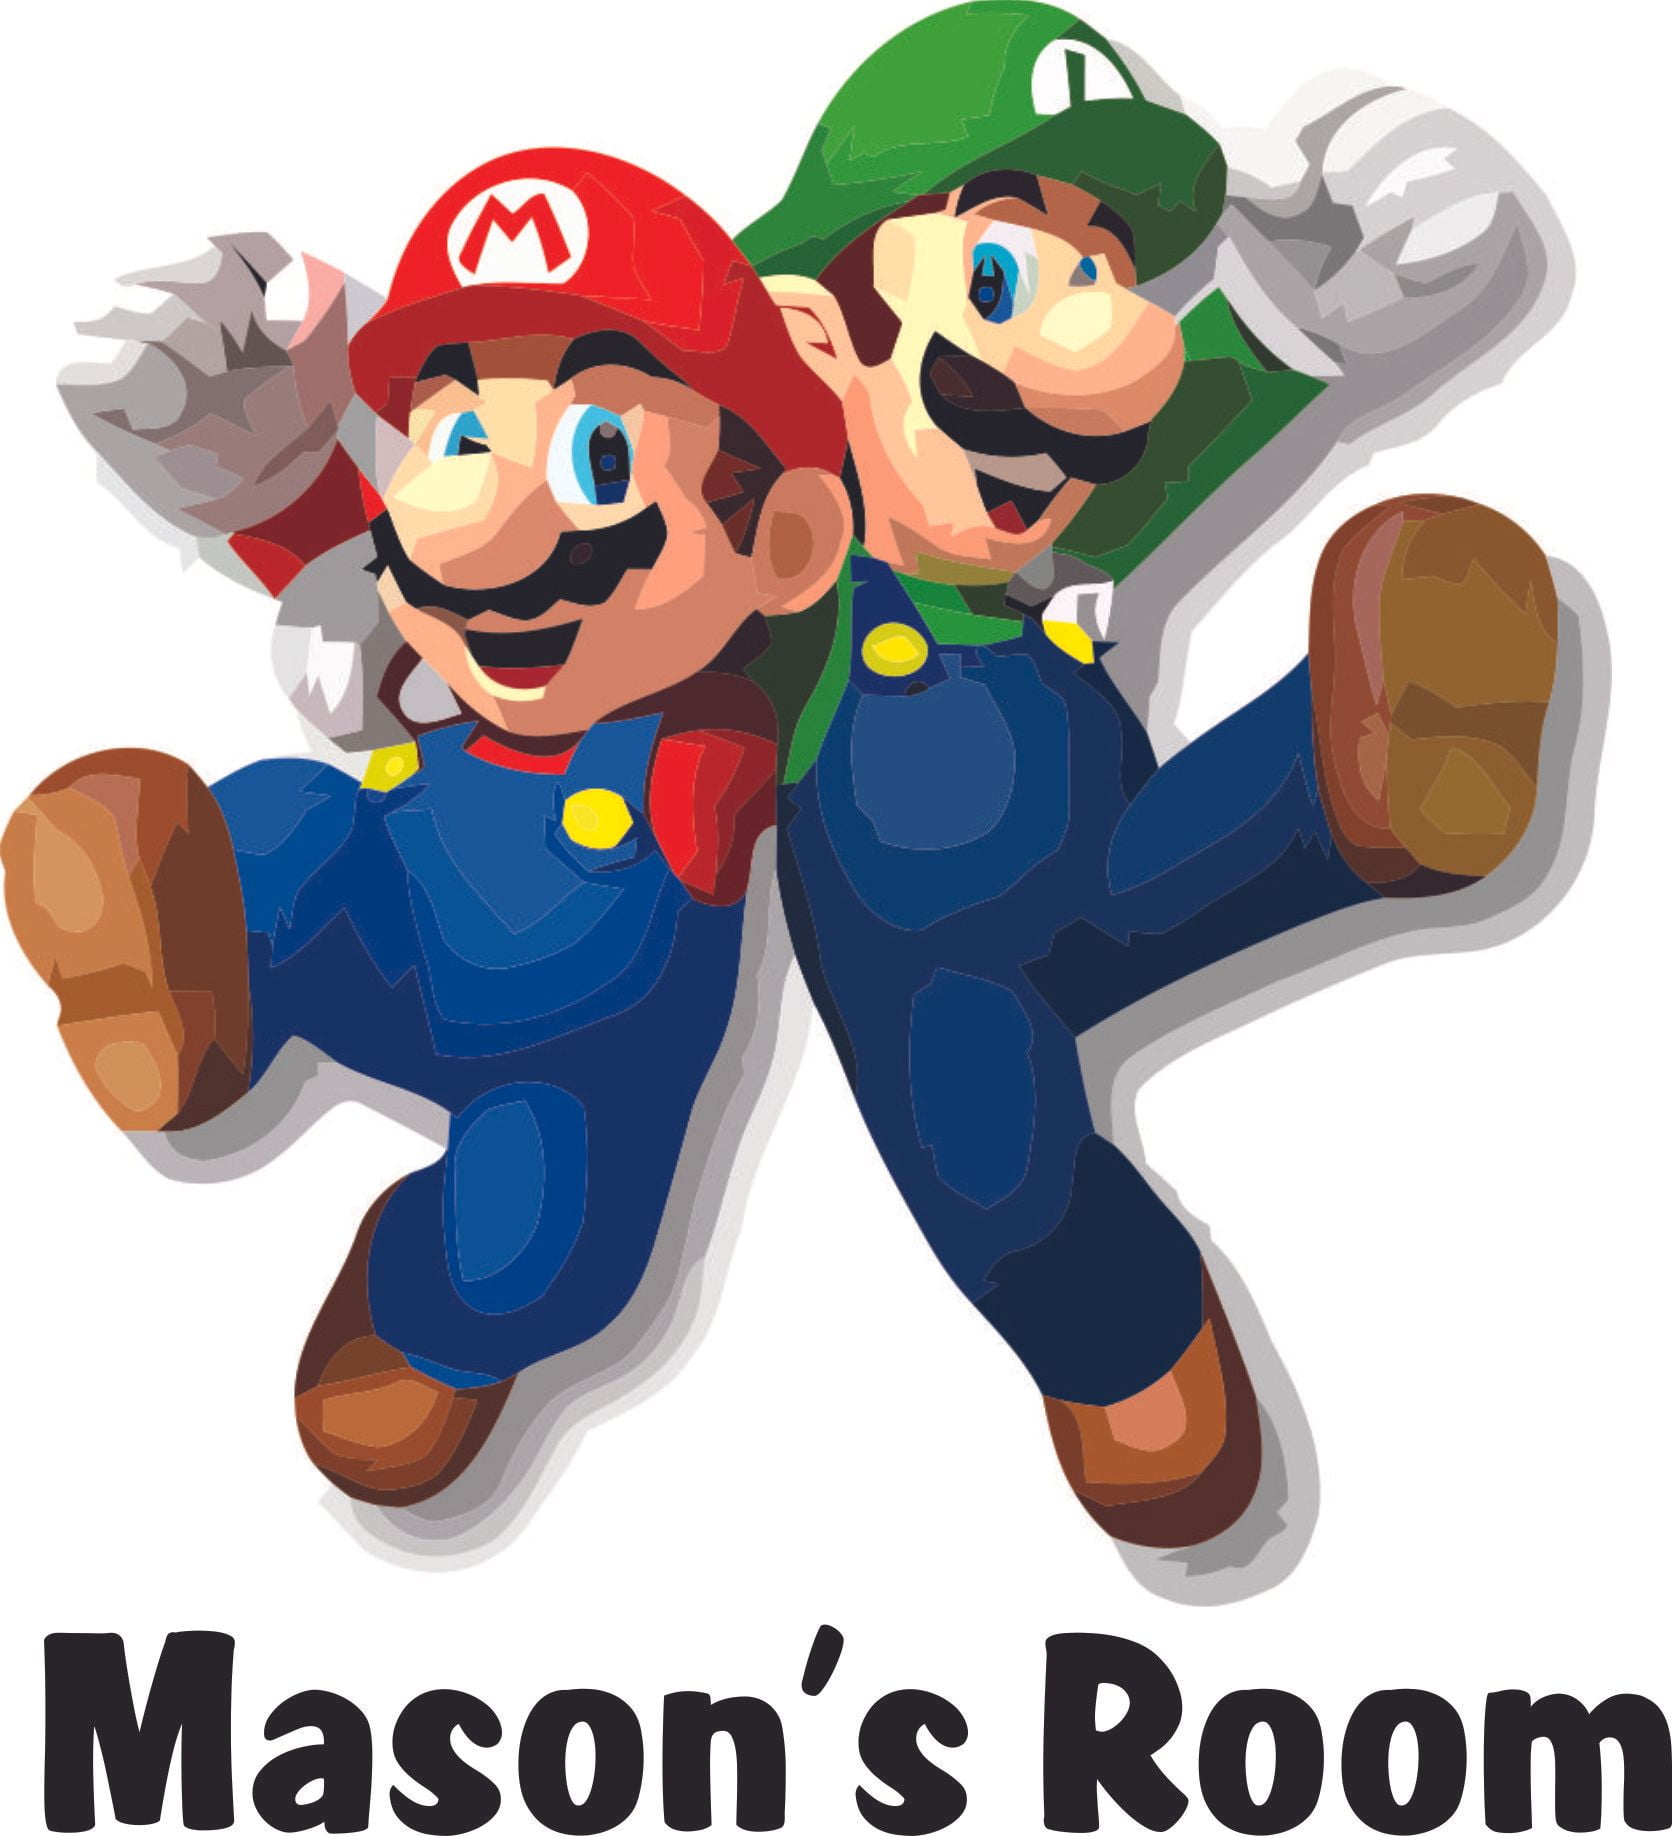 Mario and Luigi from Super Mario Vinyl Die Cut Decal Sticker